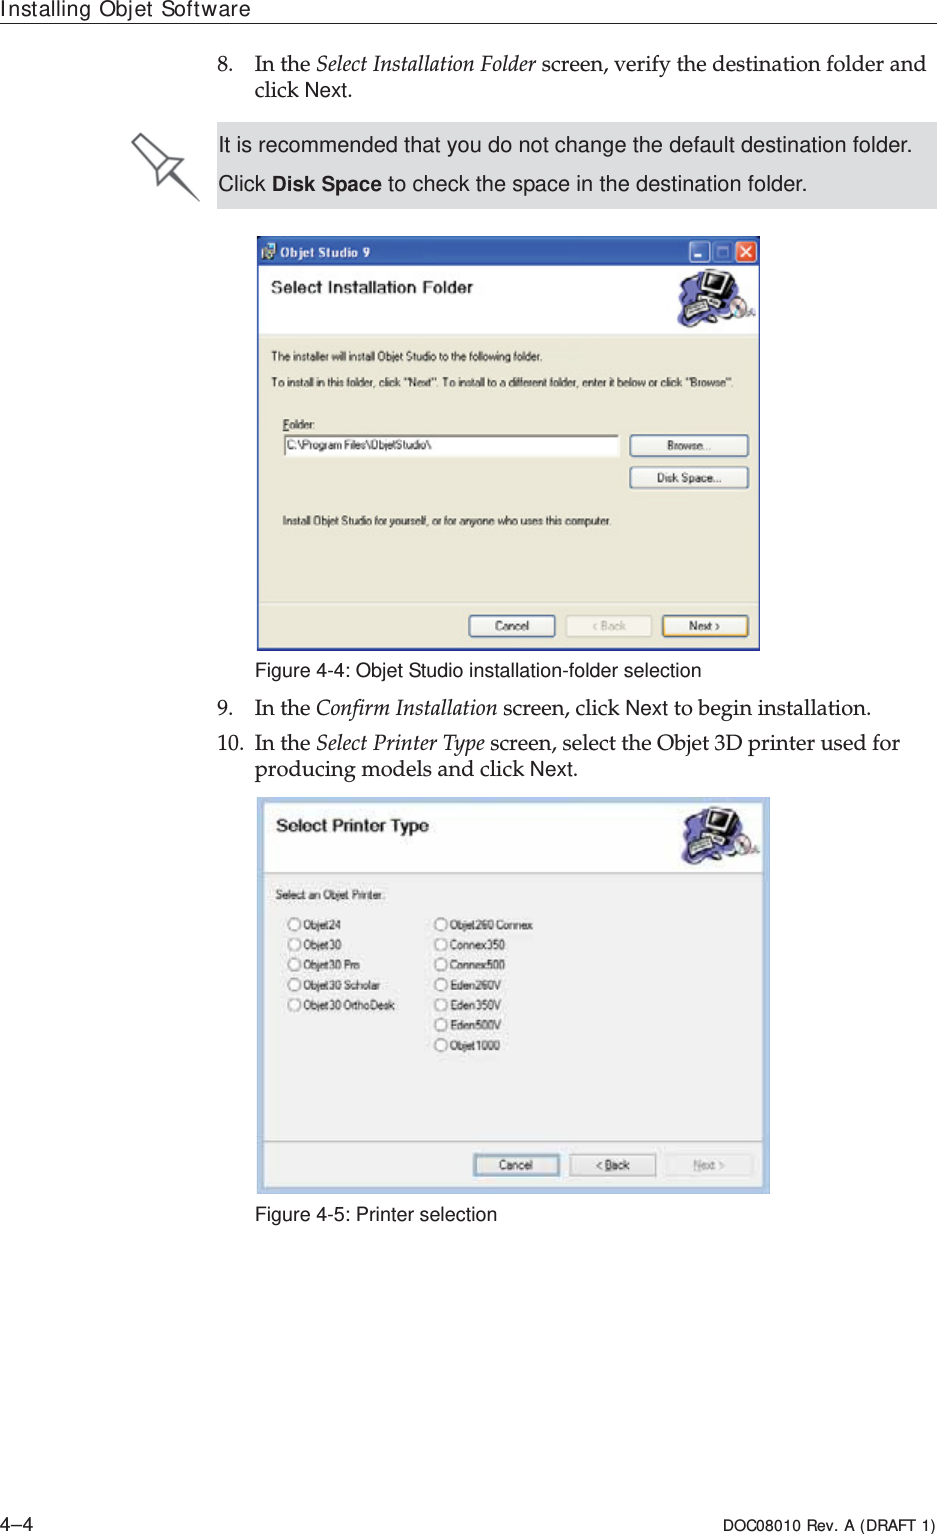 Installing Objet Software4–4 DOC08010 Rev. A (DRAFT 1)8. InȱtheȱSelectȱInstallationȱFolderȱscreen,ȱverifyȱtheȱdestinationȱfolderȱandȱclickȱNext.ȱFigure 4-4: Objet Studio installation-folder selection9. InȱtheȱConfirmȱInstallationȱscreen,ȱclickȱNext toȱbeginȱinstallation.ȱ10. InȱtheȱSelectȱPrinterȱTypeȱscreen,ȱselectȱtheȱObjetȱ3DȱprinterȱusedȱforȱproducingȱmodelsȱandȱclickȱNext.Figure 4-5: Printer selectionIt is recommended that you do not change the default destination folder.Click Disk Space to check the space in the destination folder.